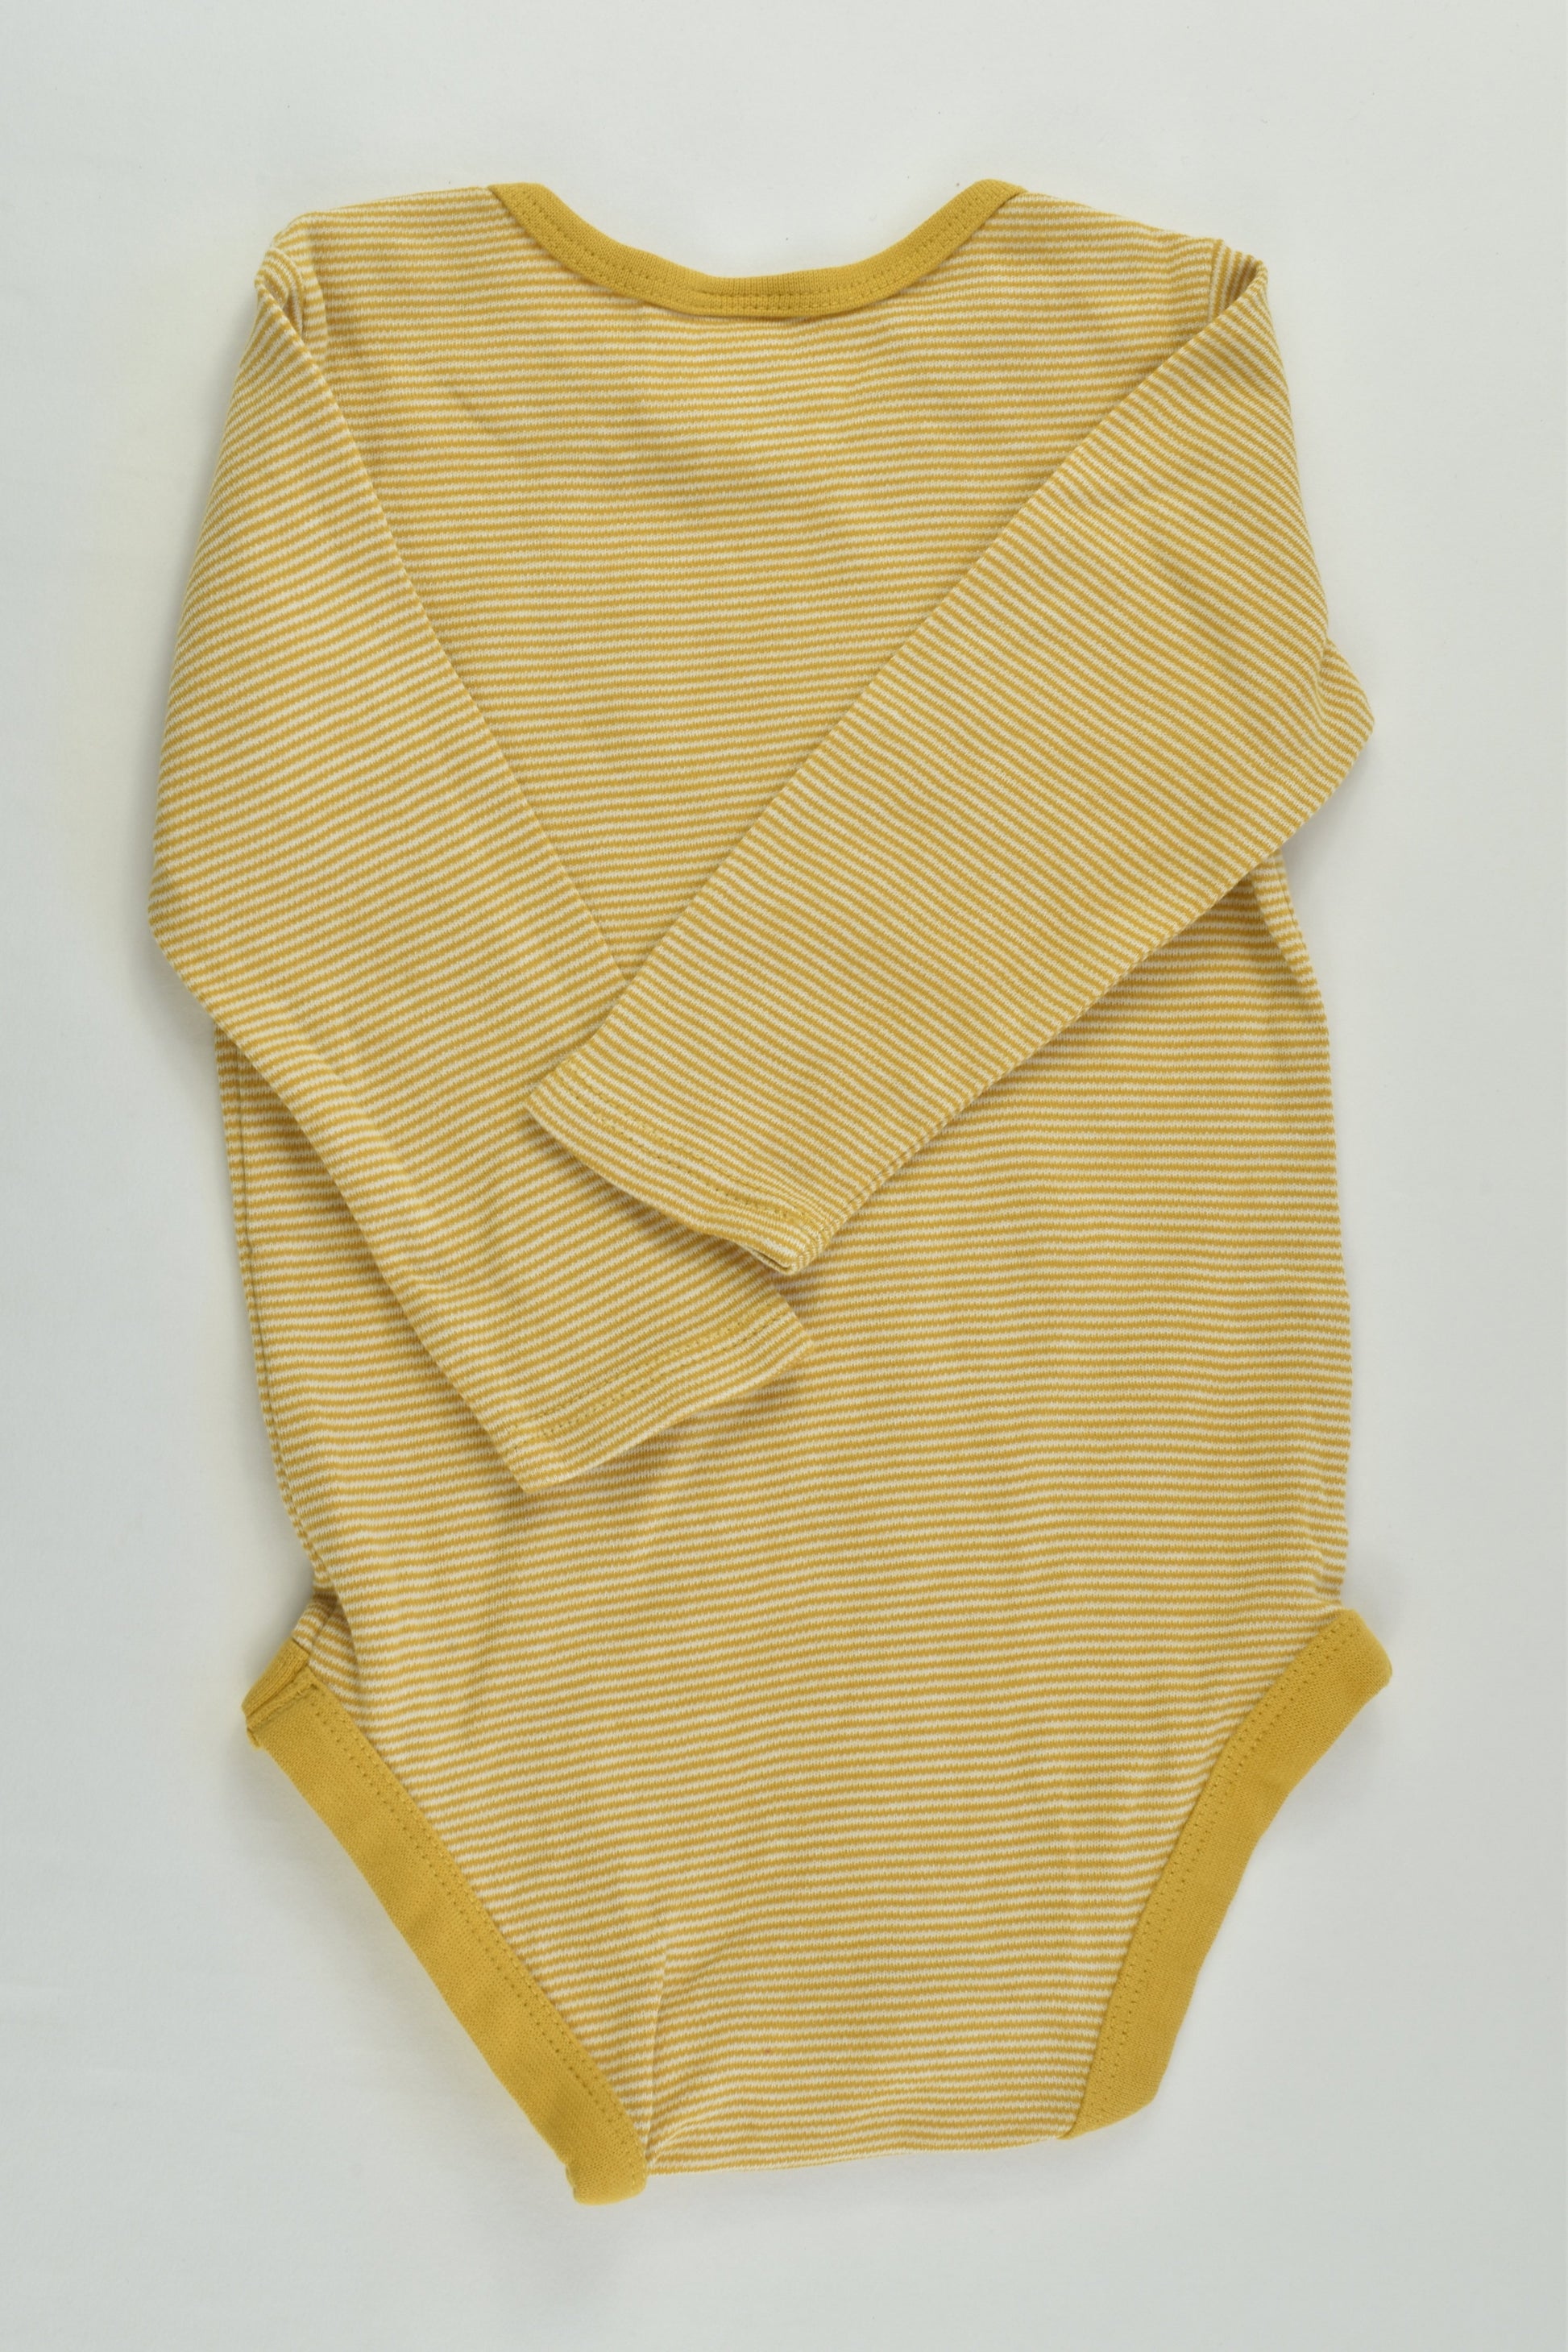 Target Size 0 (6-12 months) Mustard Stripes Bodysuit